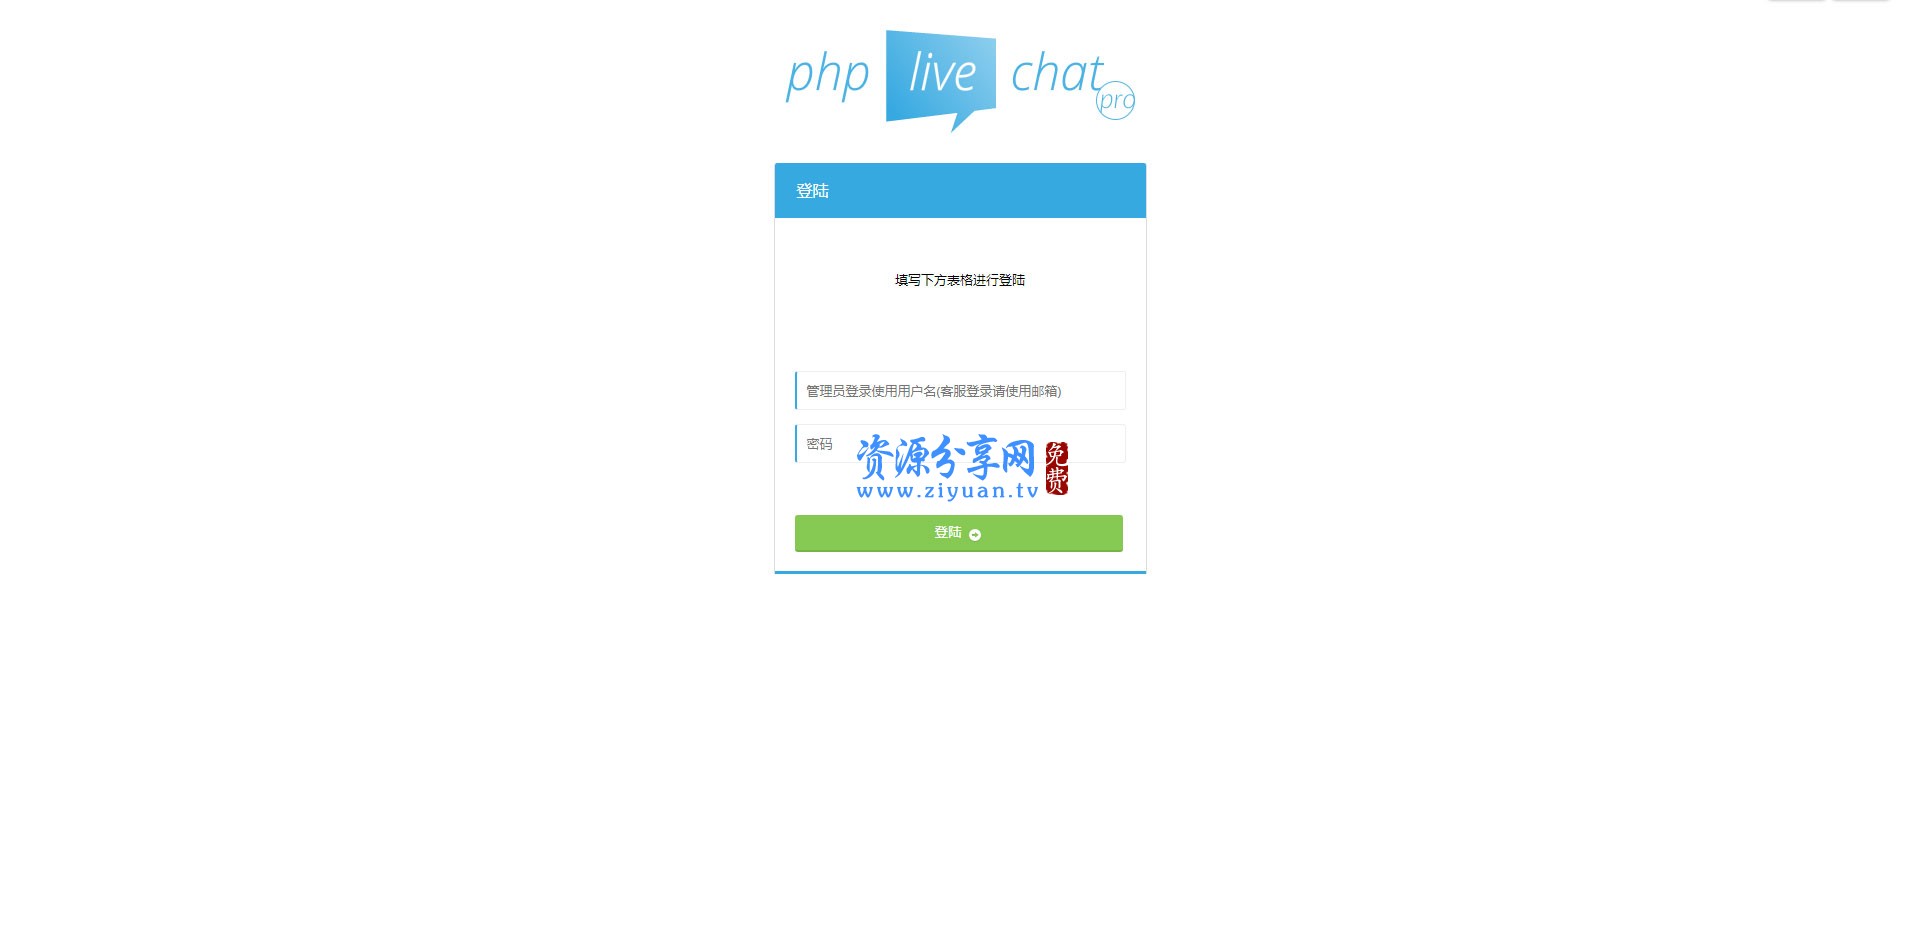 PHP 多坐席客服聊天系统 完美定制版+手机自适应网页单独聊天+PC 端右下角弹窗+带原生 APP